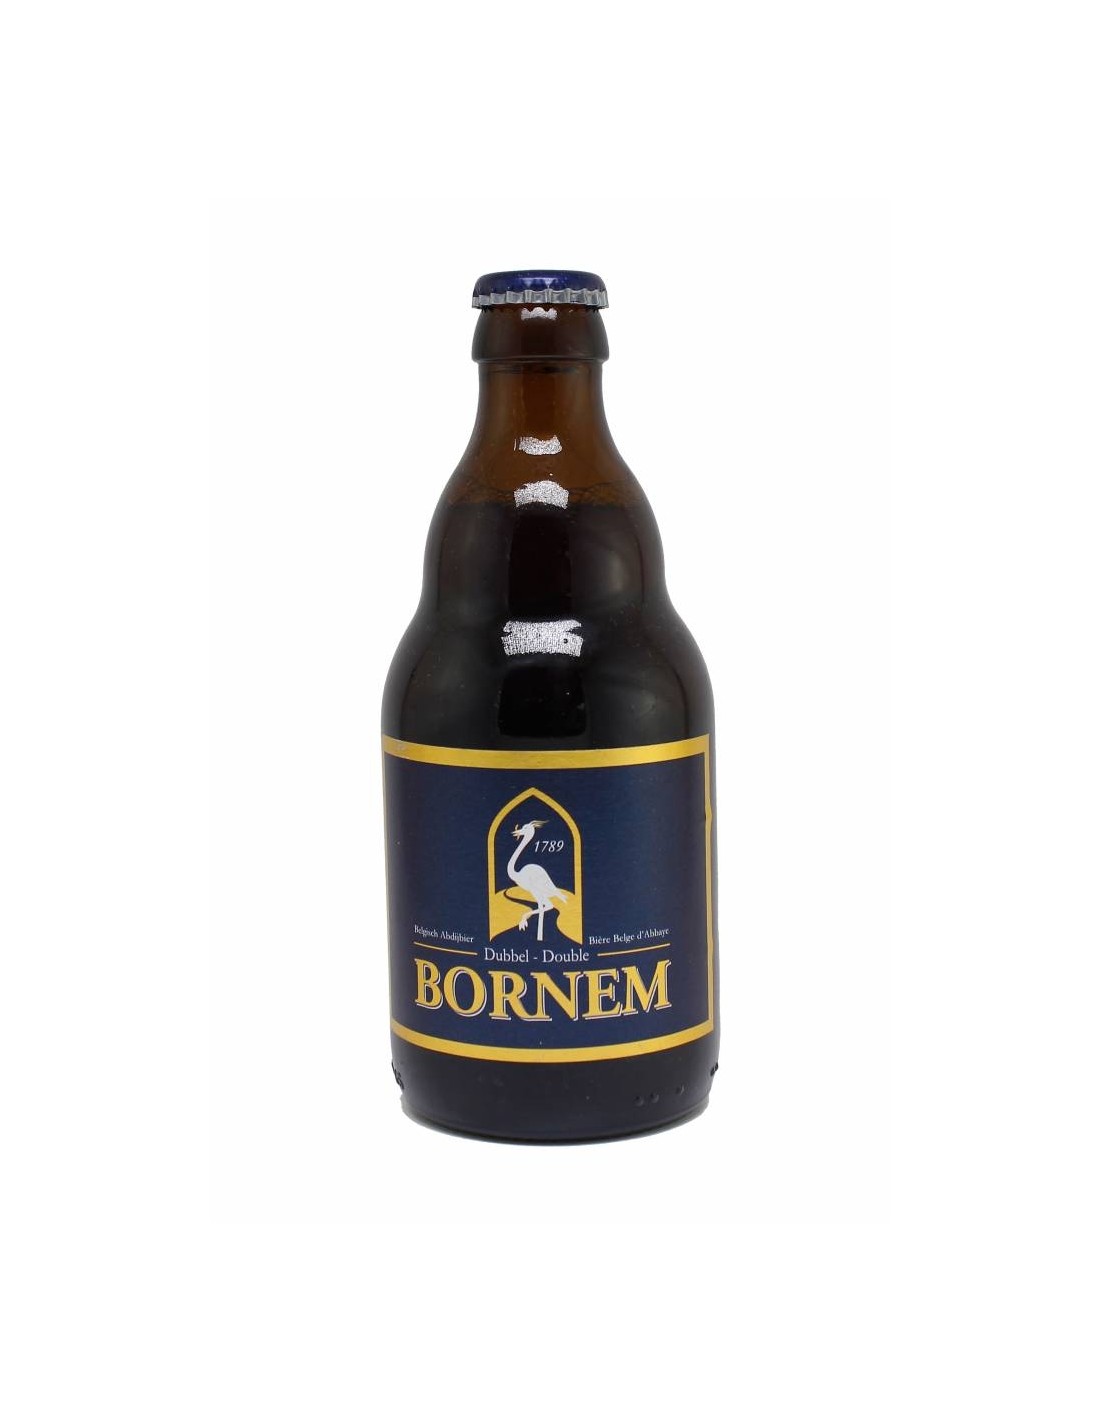 Bere neagra, filtrata Bornem, 8% alc., 0.33L, Belgia alcooldiscount.ro